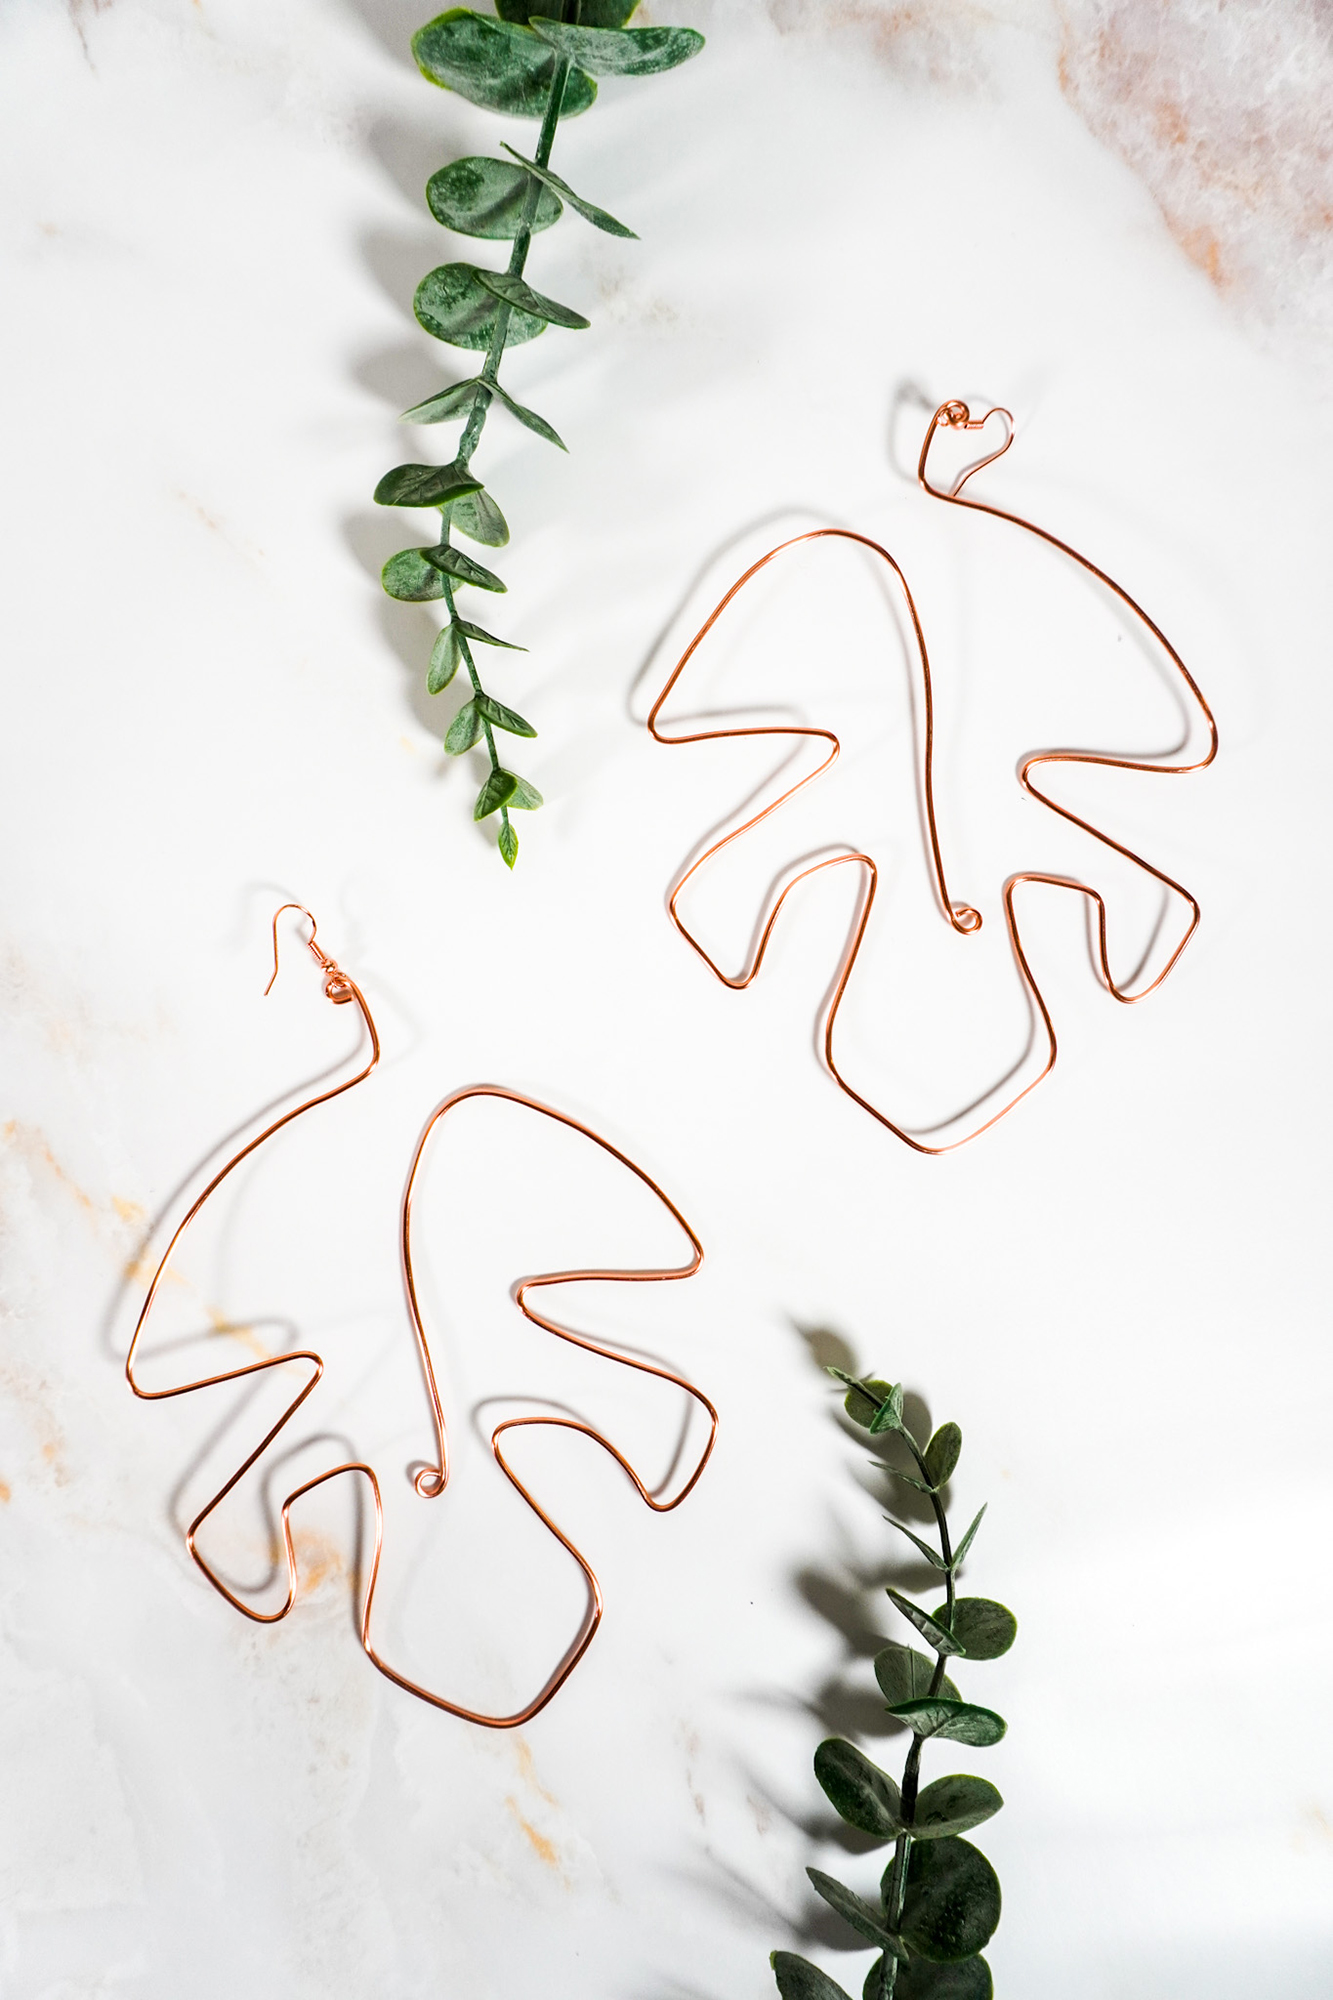 Image of handmade wire earrings